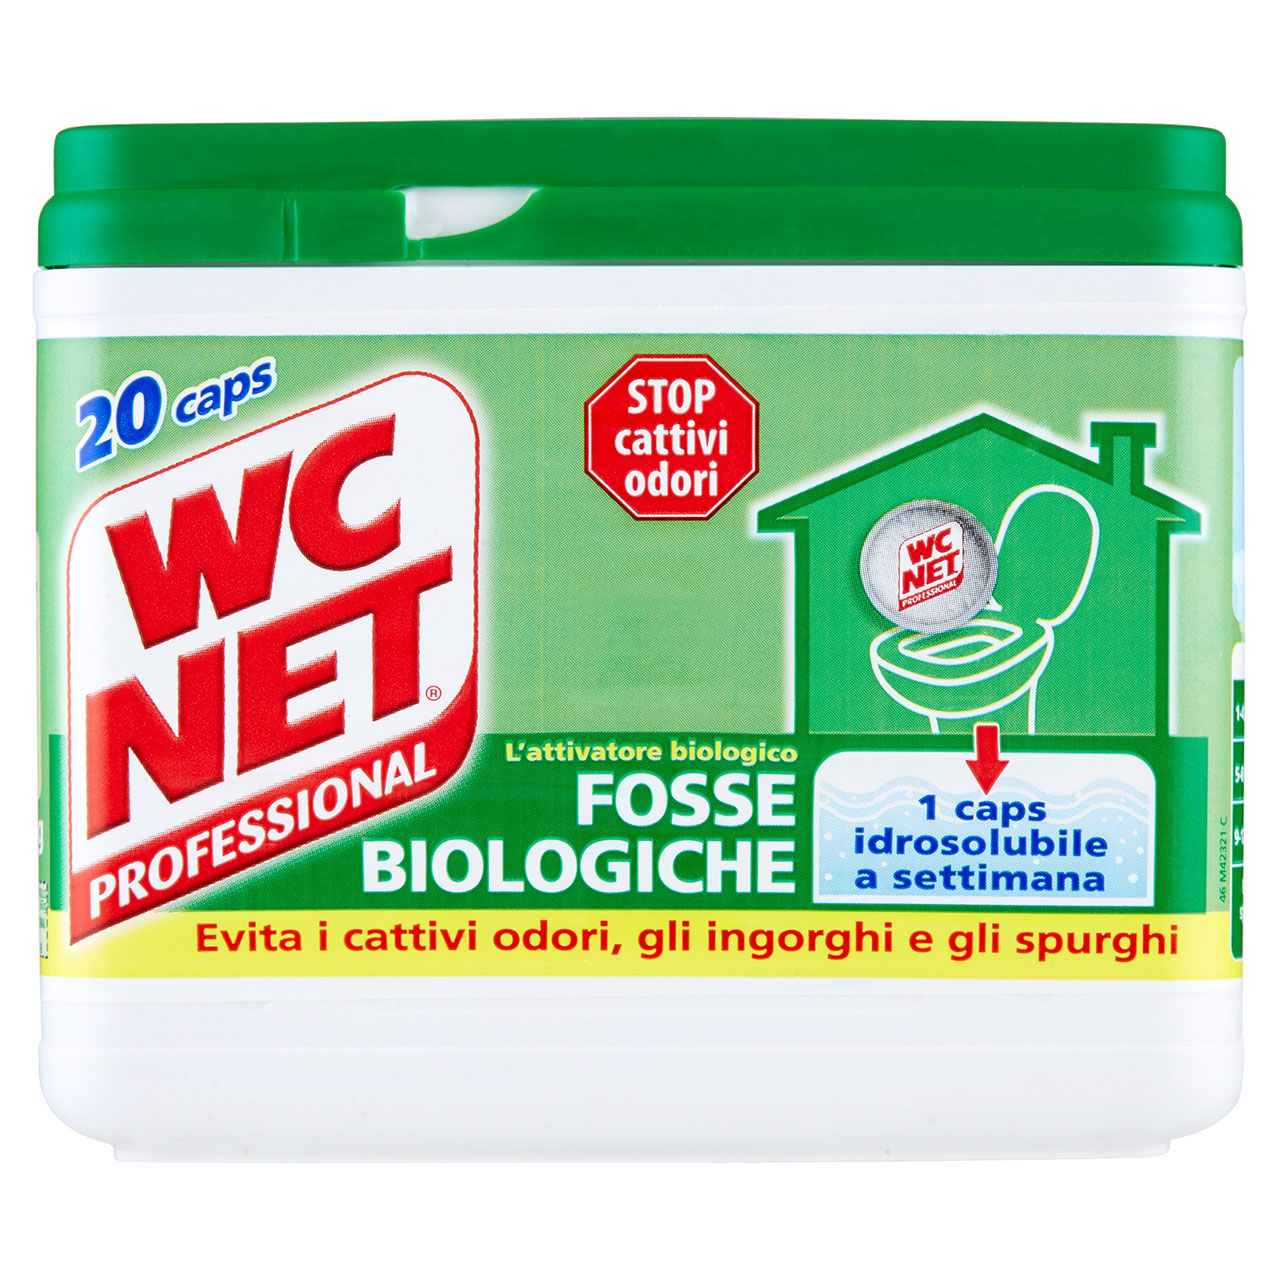 Wc Net Professional Fosse Biologiche 20 caps 360 g